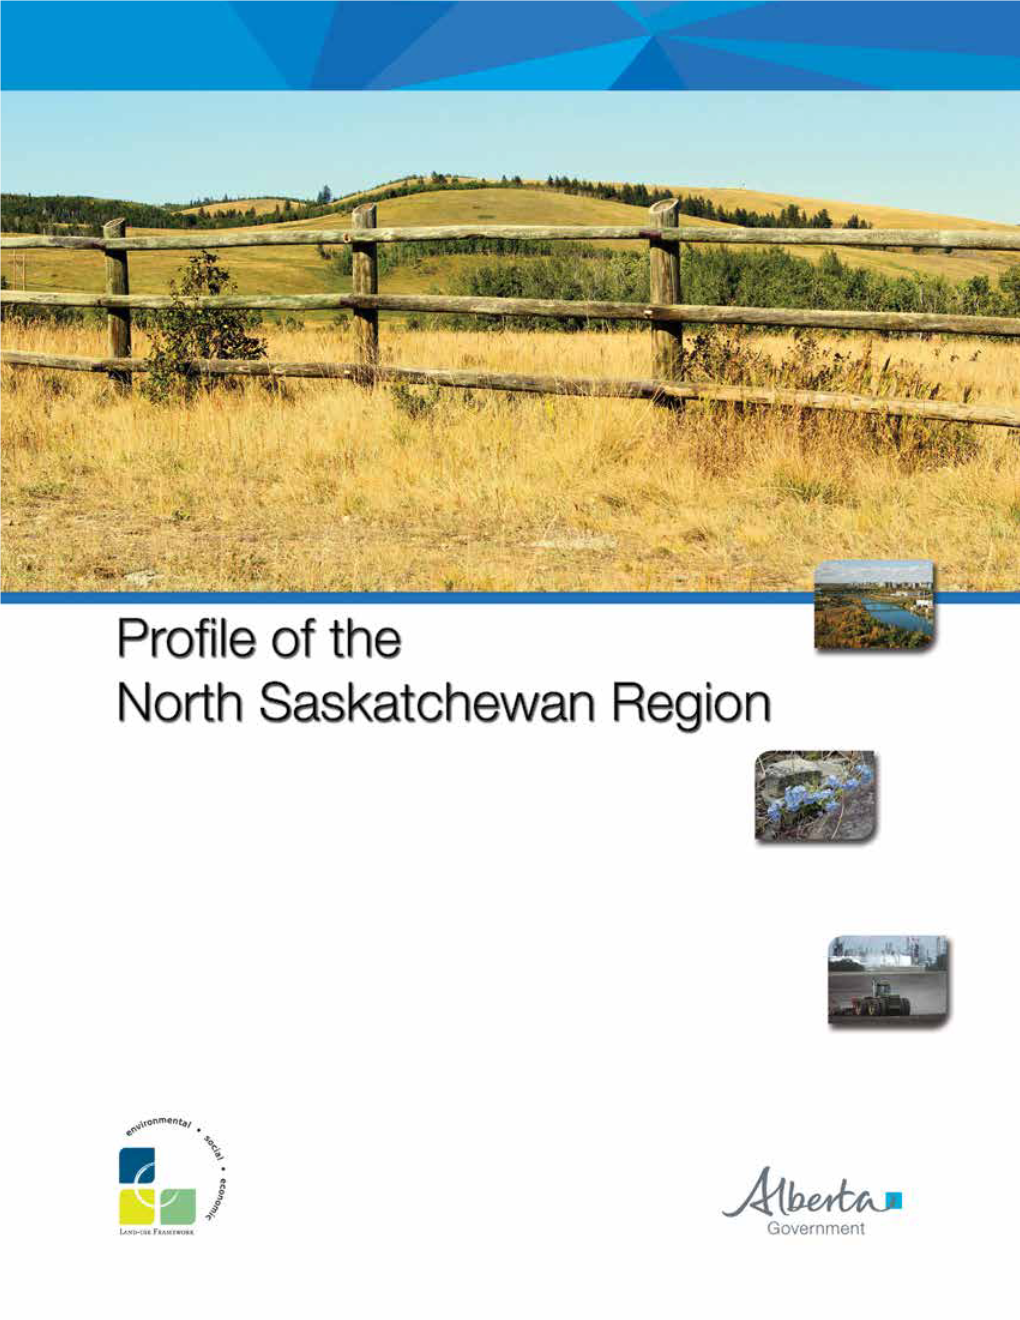 Profile of the North Saskatchewan Region and Alberta, 201184